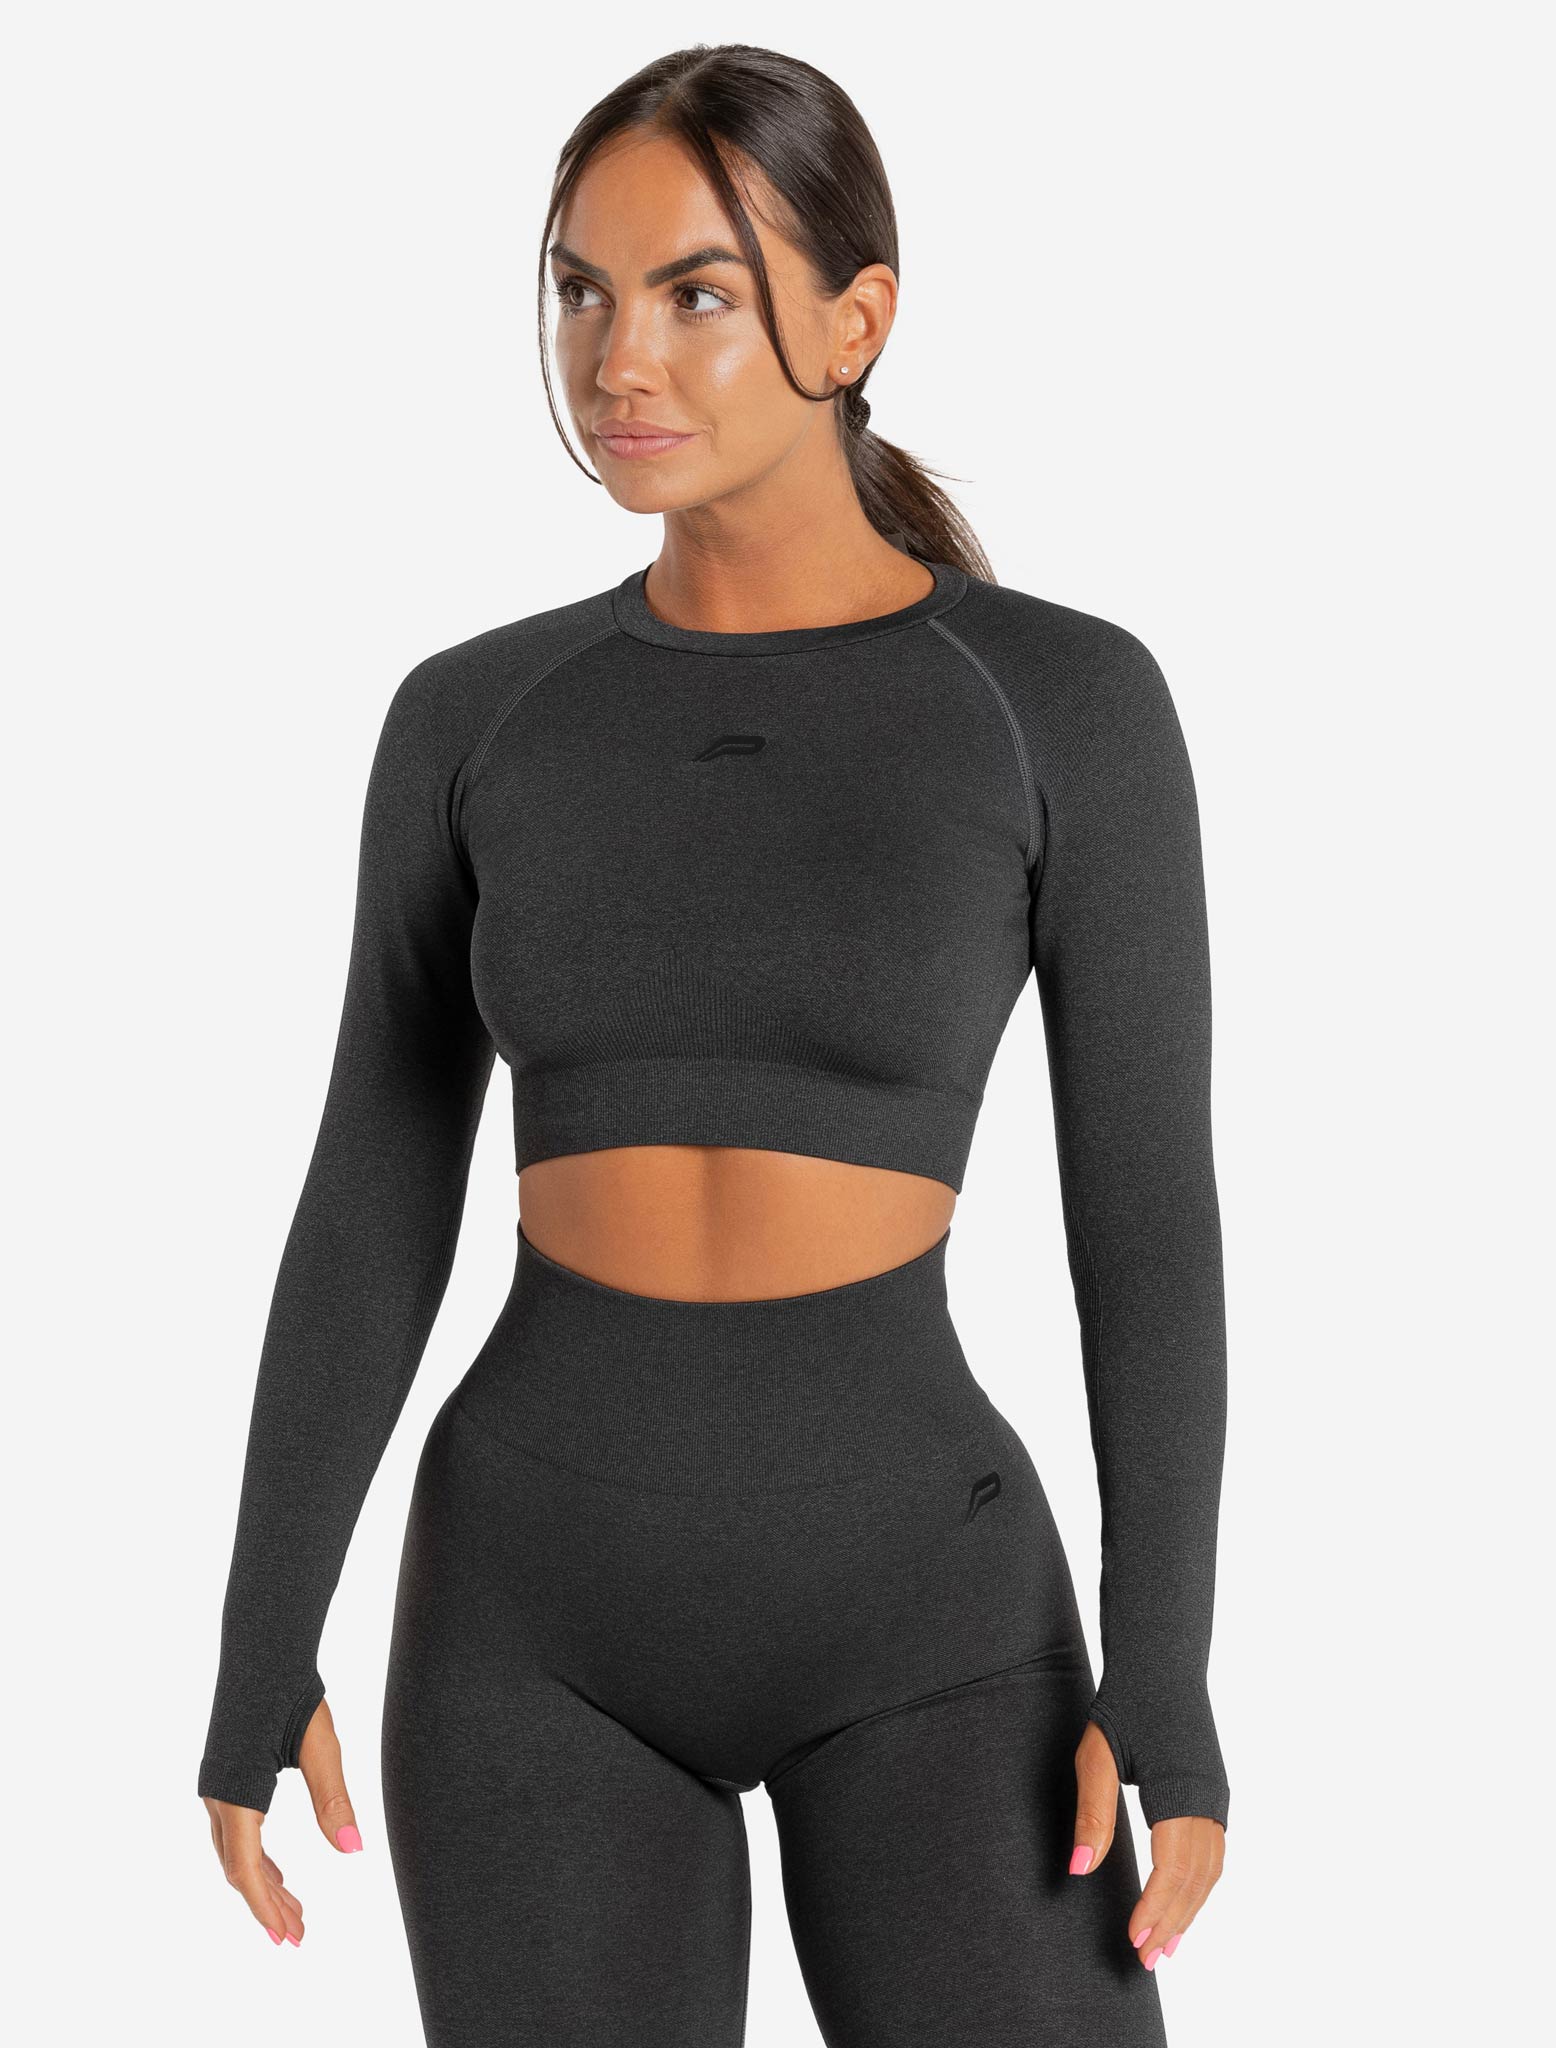 SEASUM Women Workout Crop Top Seamless Shirt Athletic Long Sleeve Fitness  Tight Tee